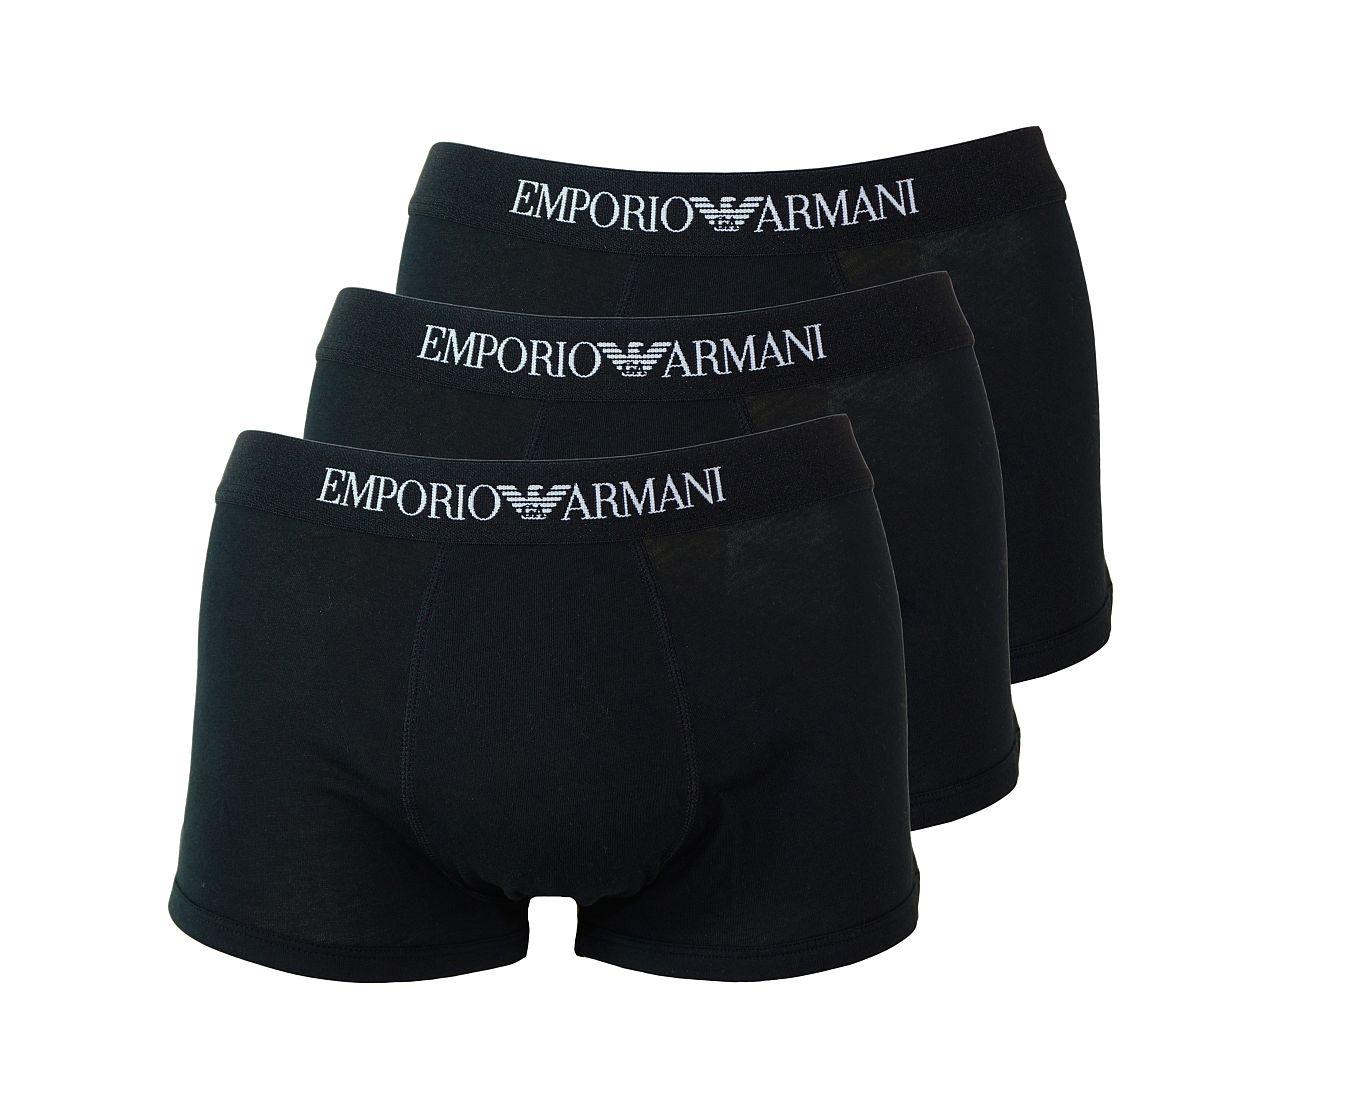 Emporio Armani 3er Pack Shorts Trunks Unterhosen nero 111610 CC722 21320